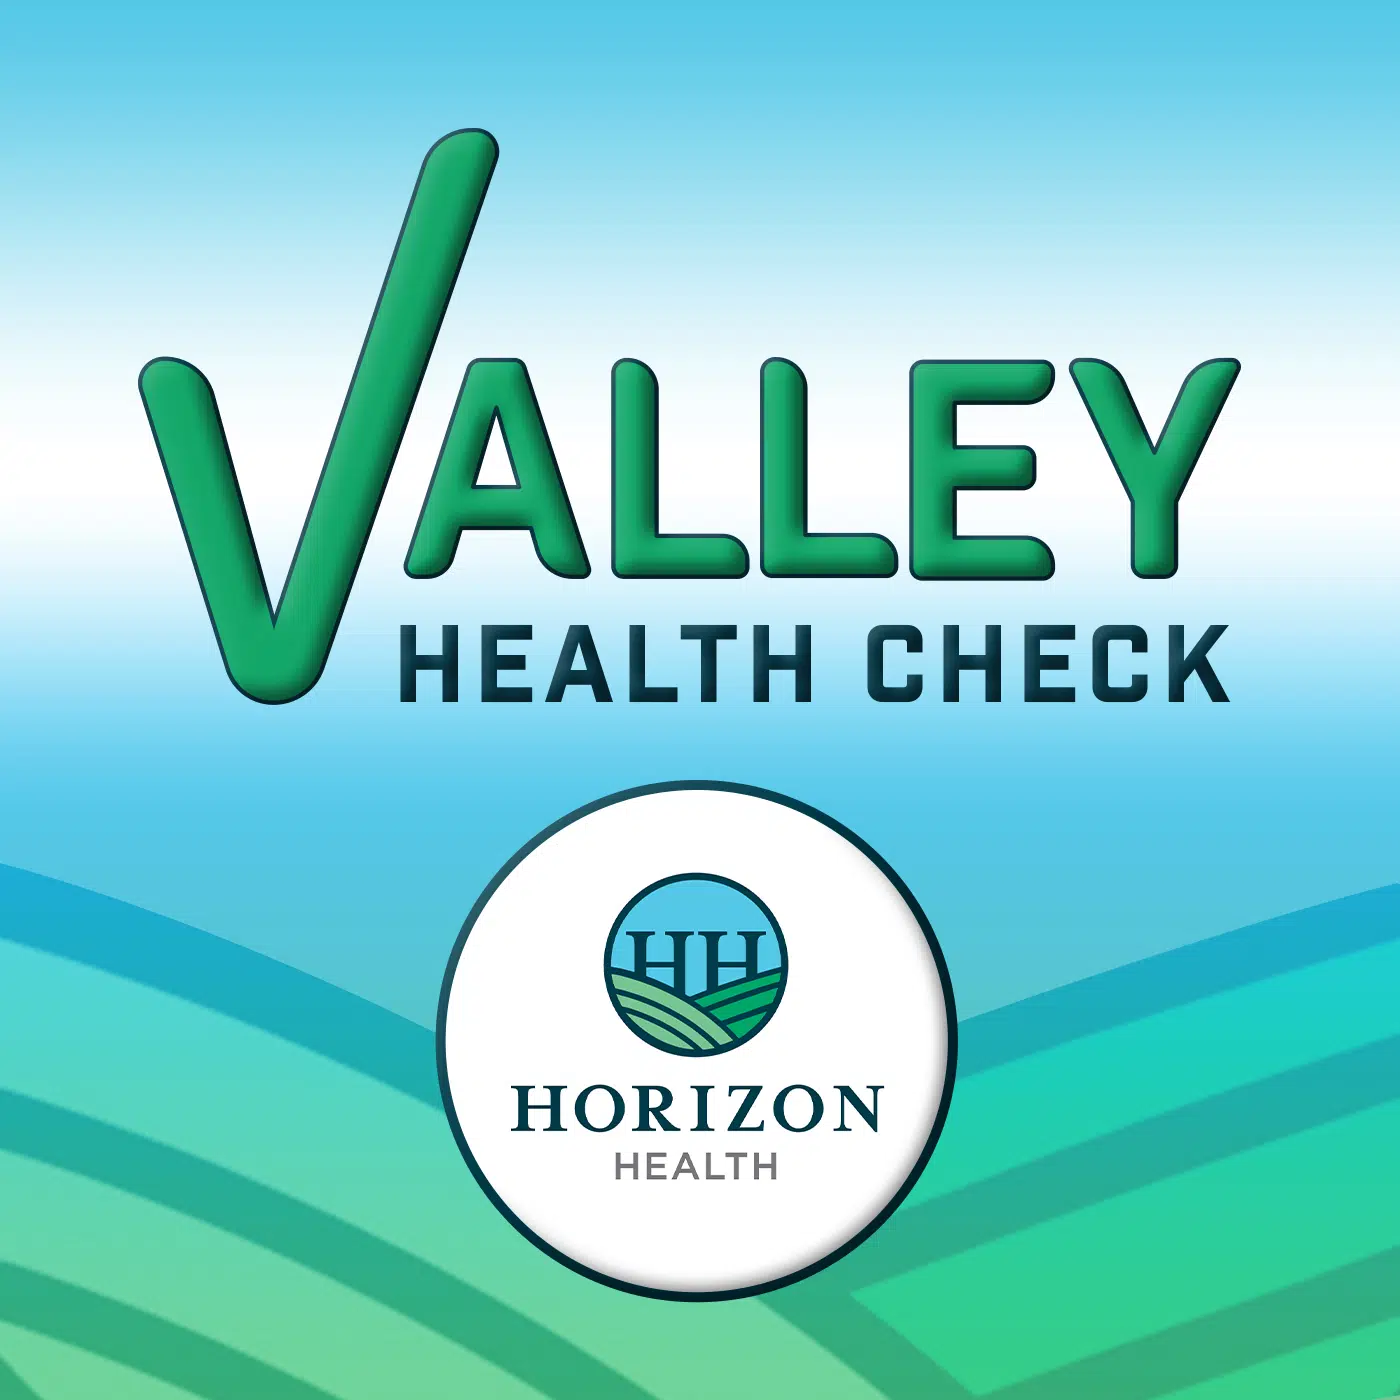 Valley Health Check with Horizon Health